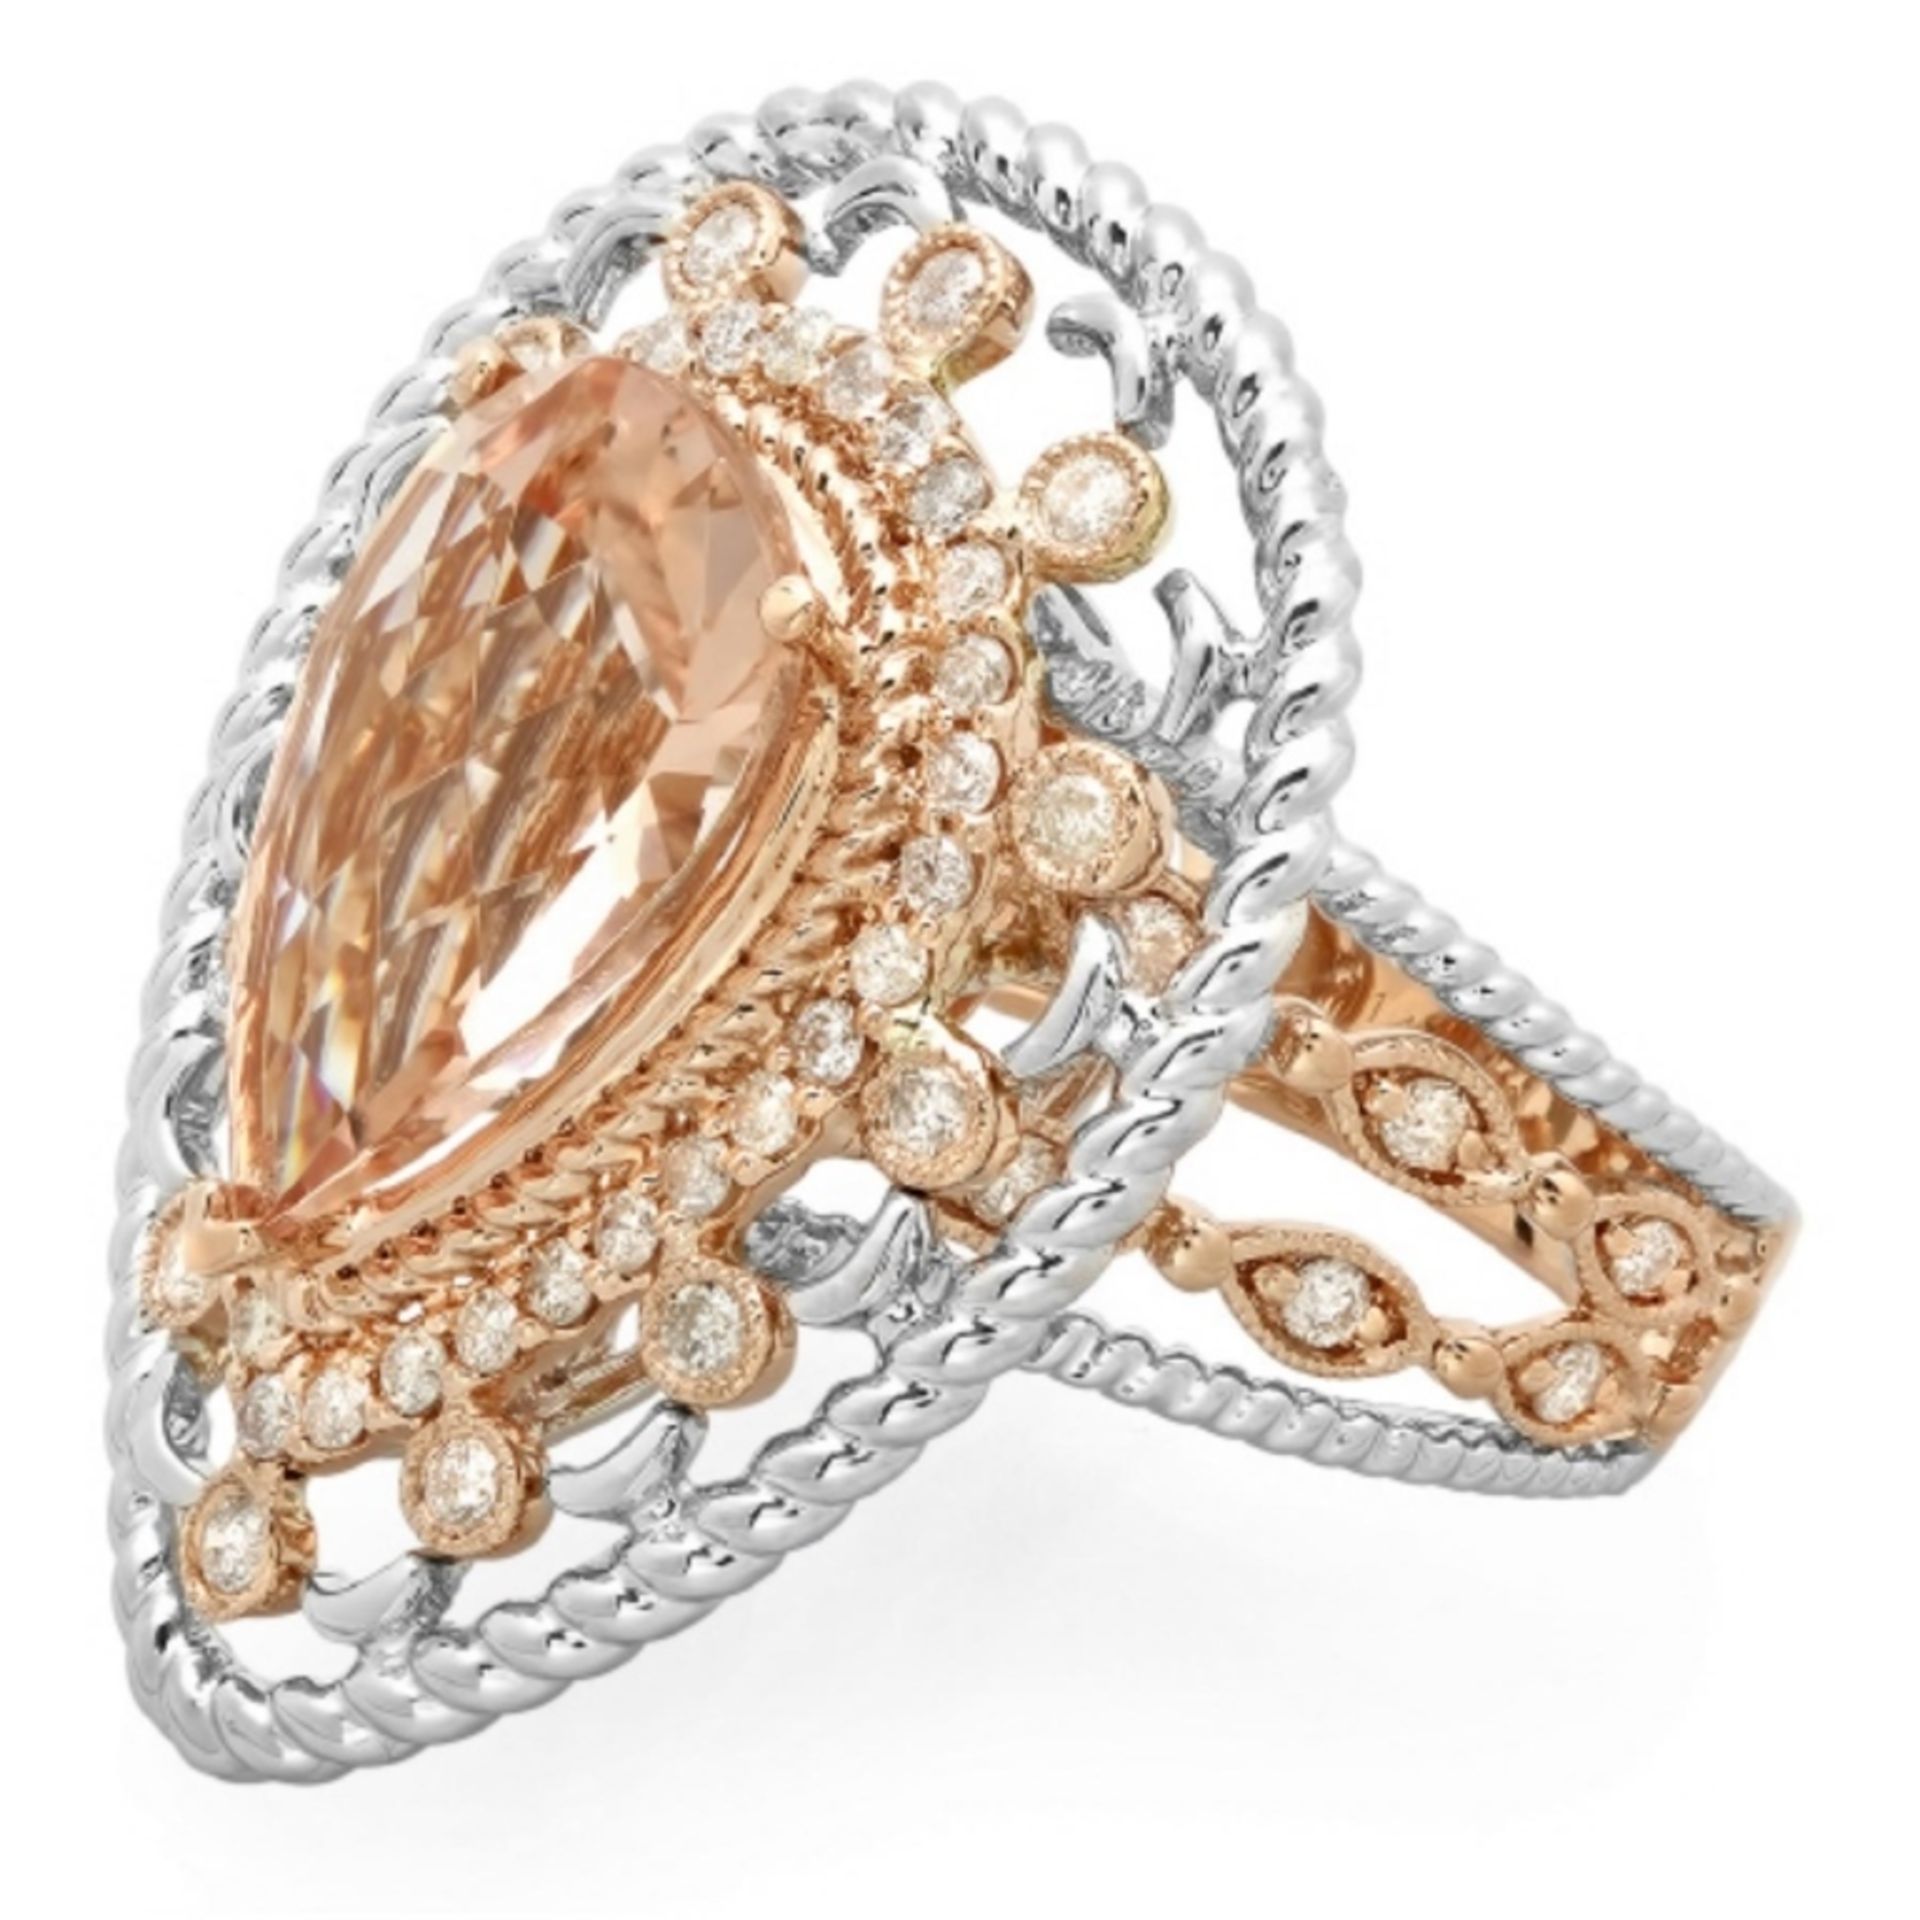 14K Gold 5.00ct Morganite & 0.75ct Diamond Ring - Image 2 of 2